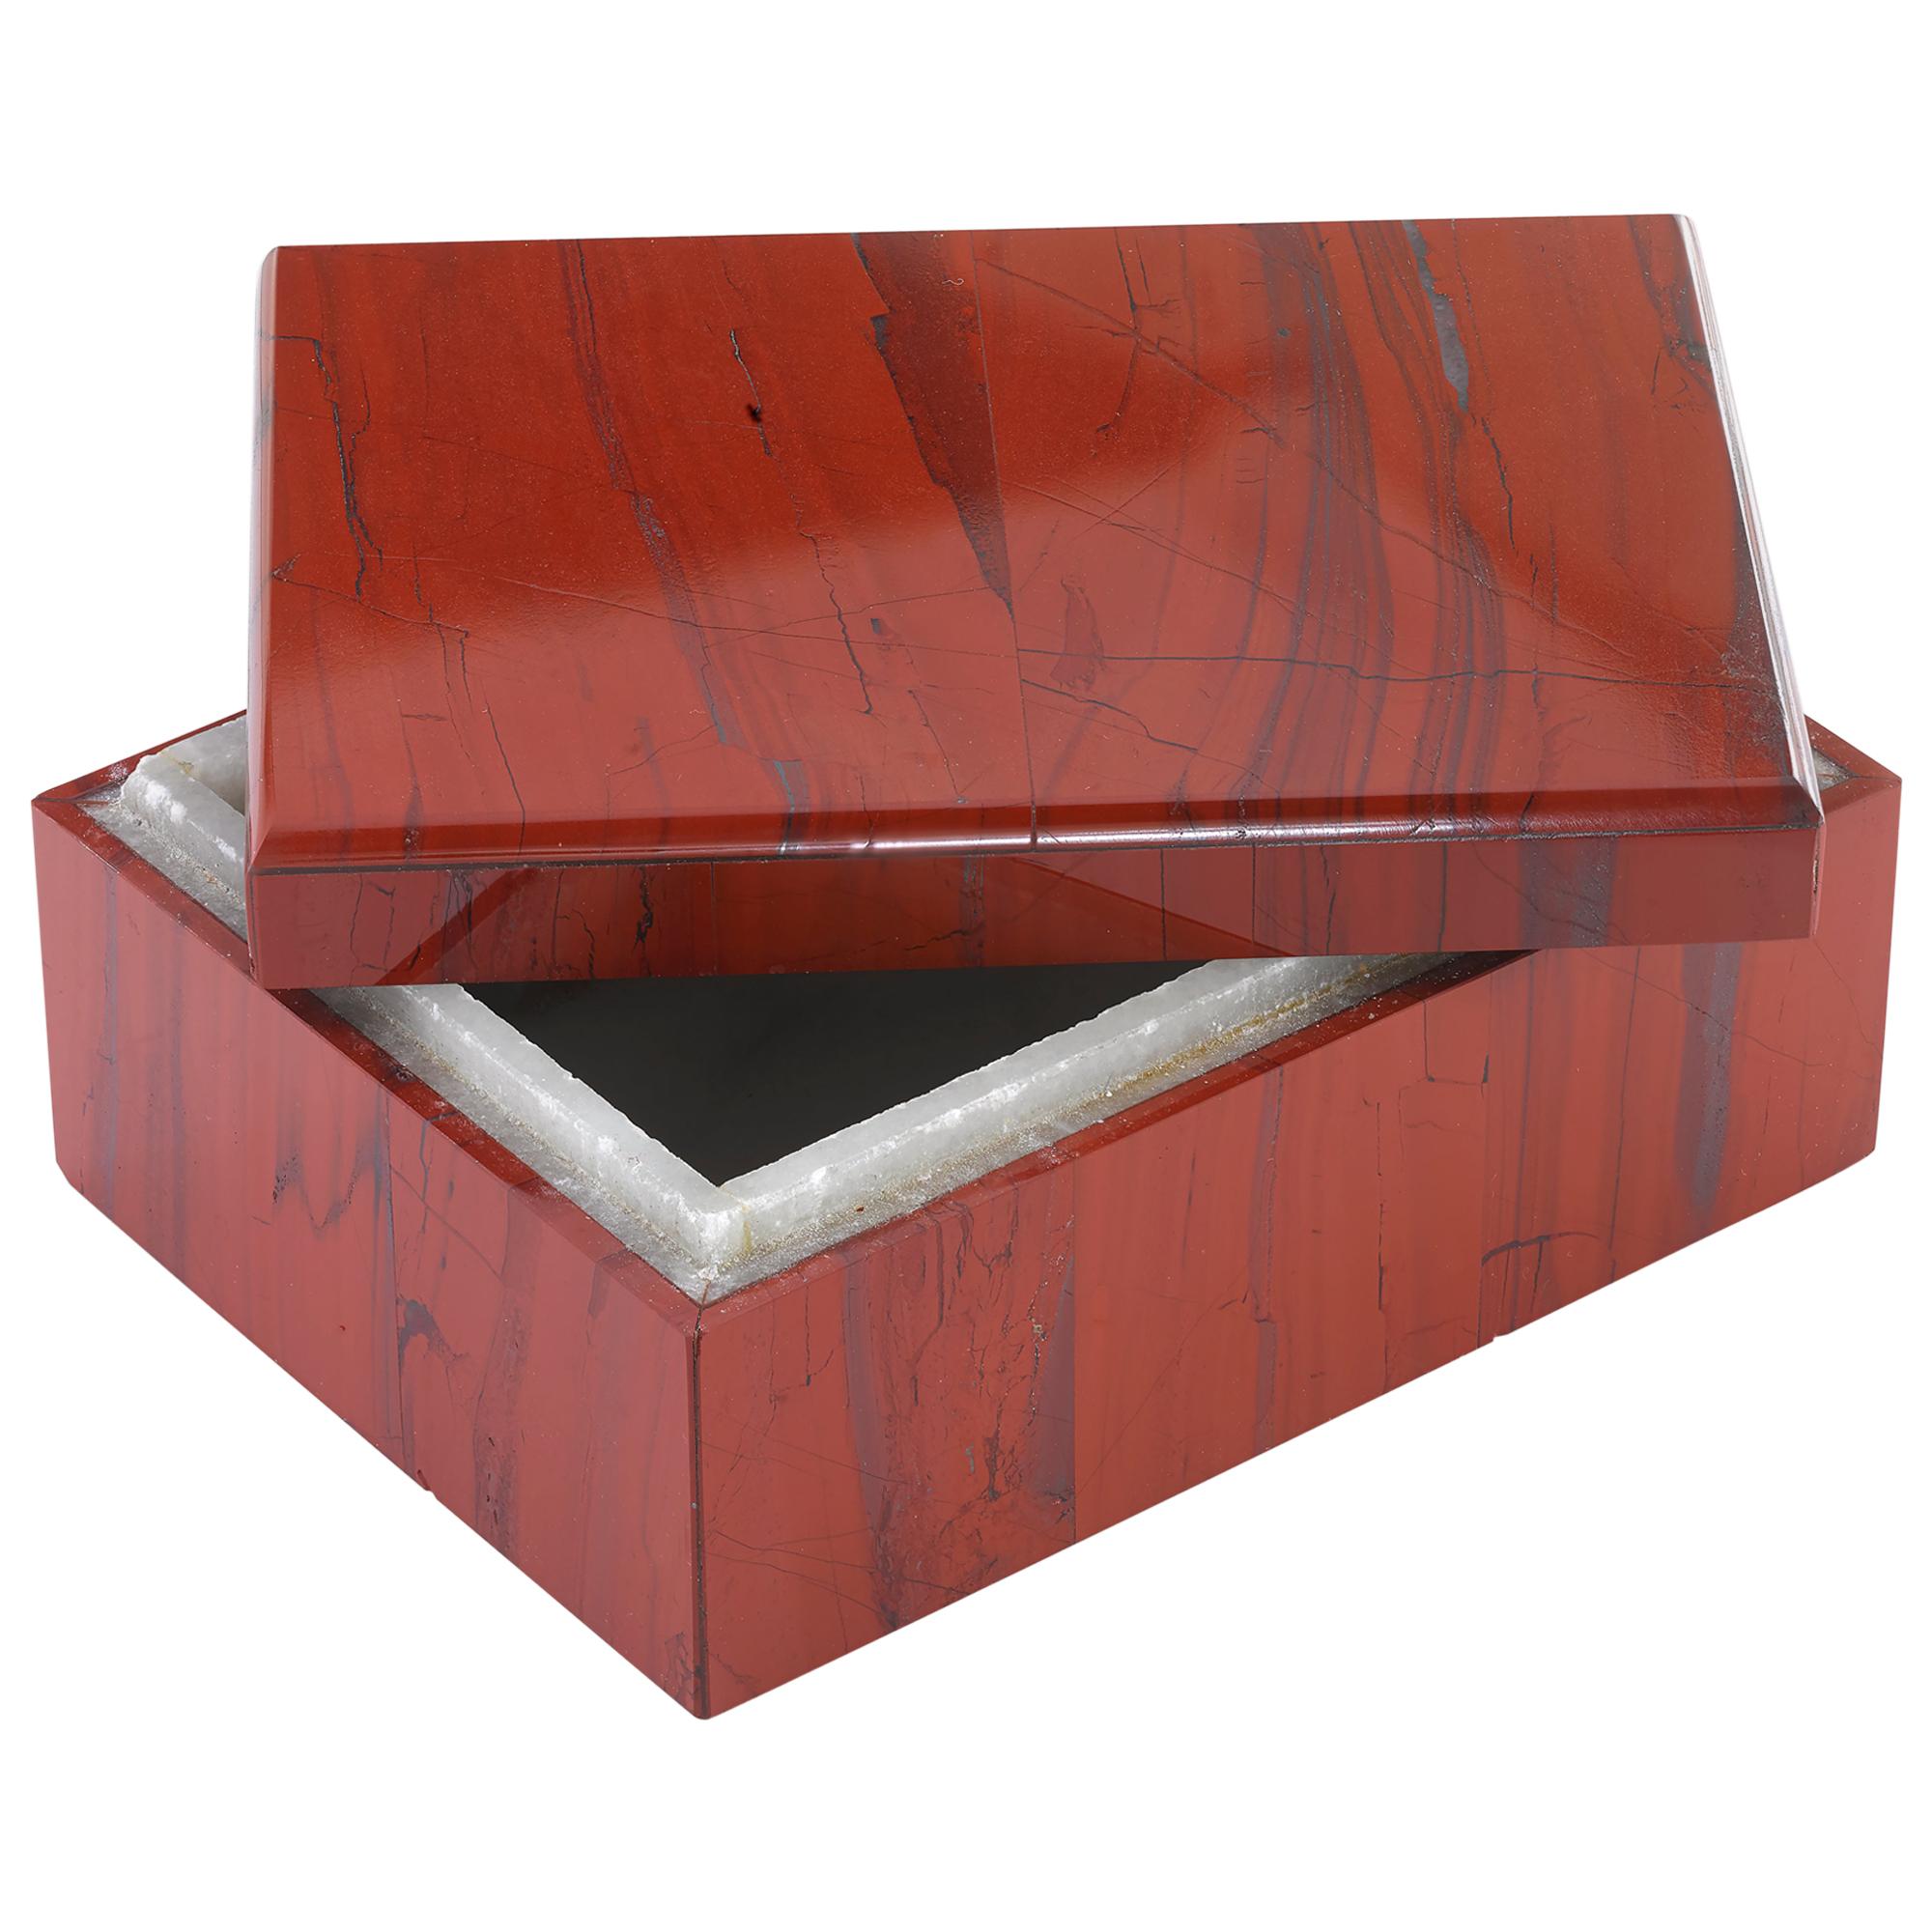 Marbled Red Jasper Semi-precious Decorative Desk Accessory / Gift Box with Lid